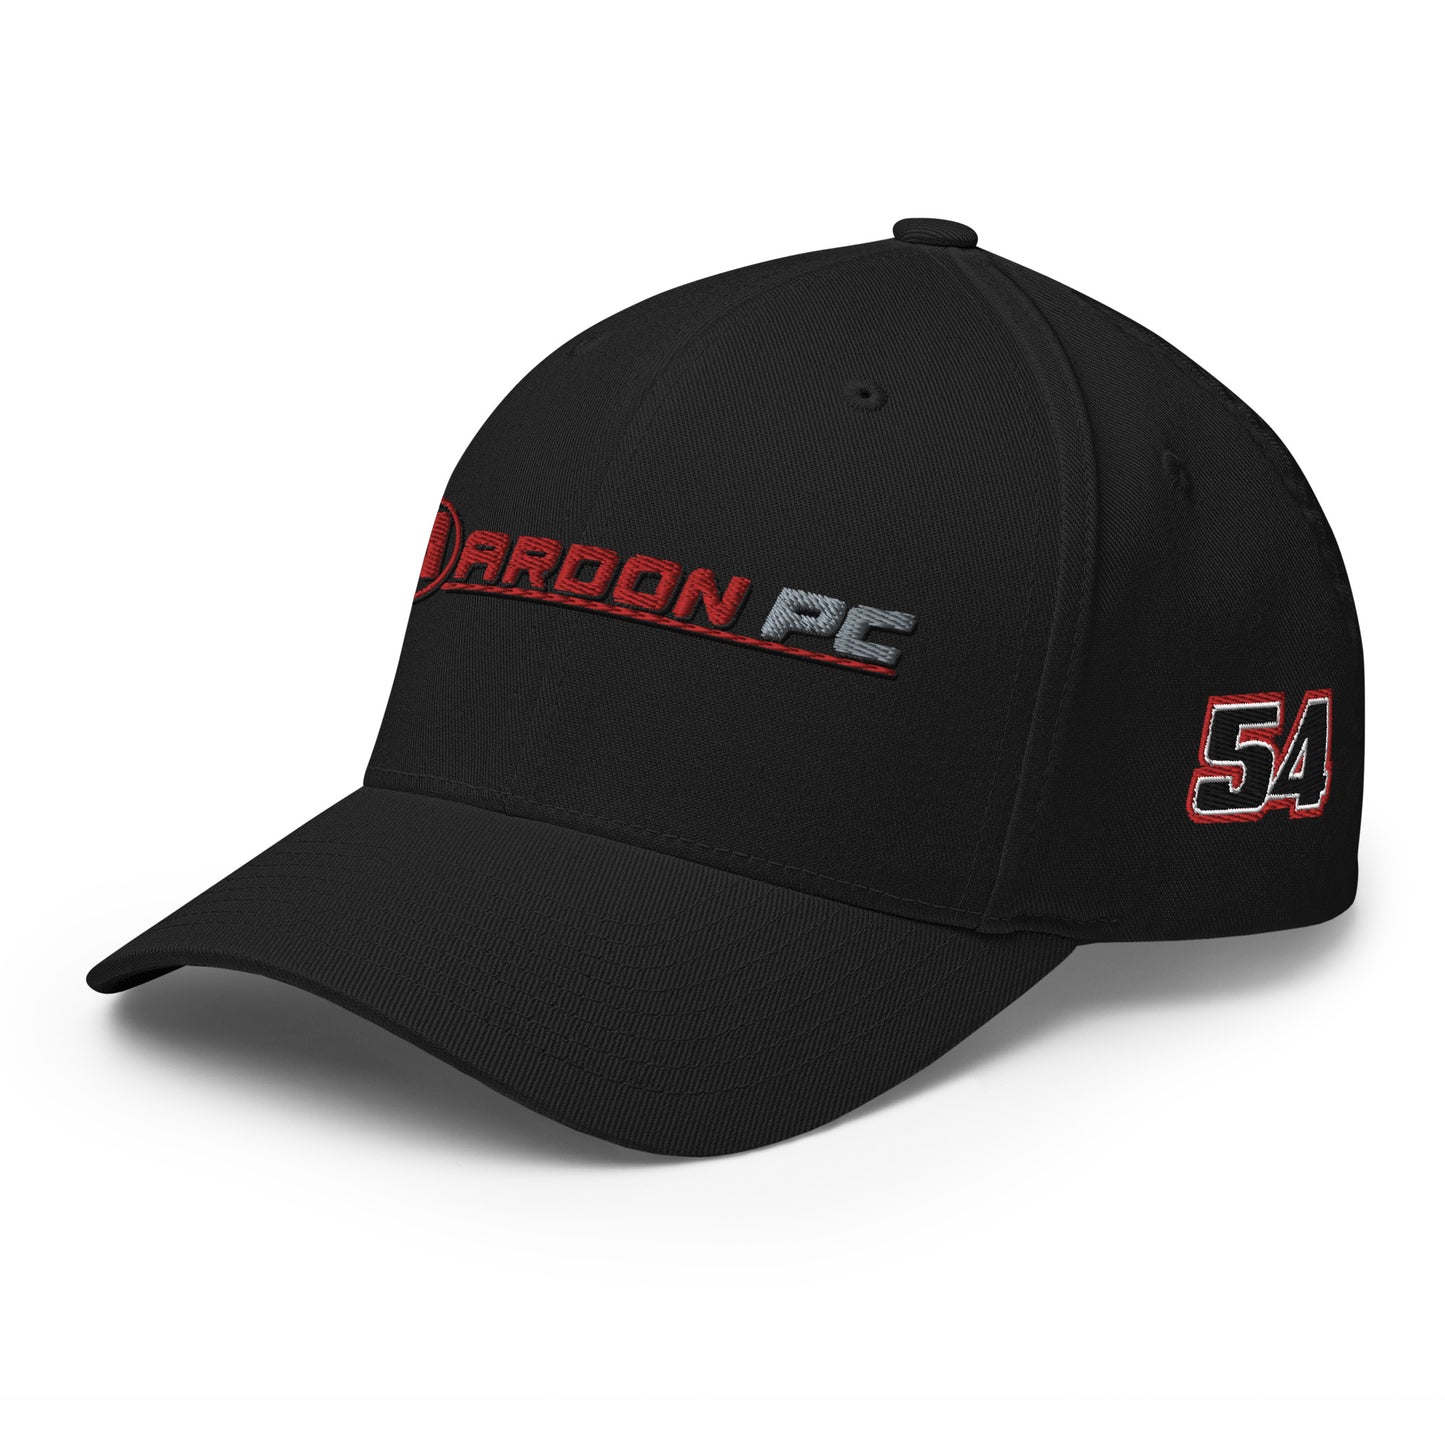 MARDON PC 54 Hat